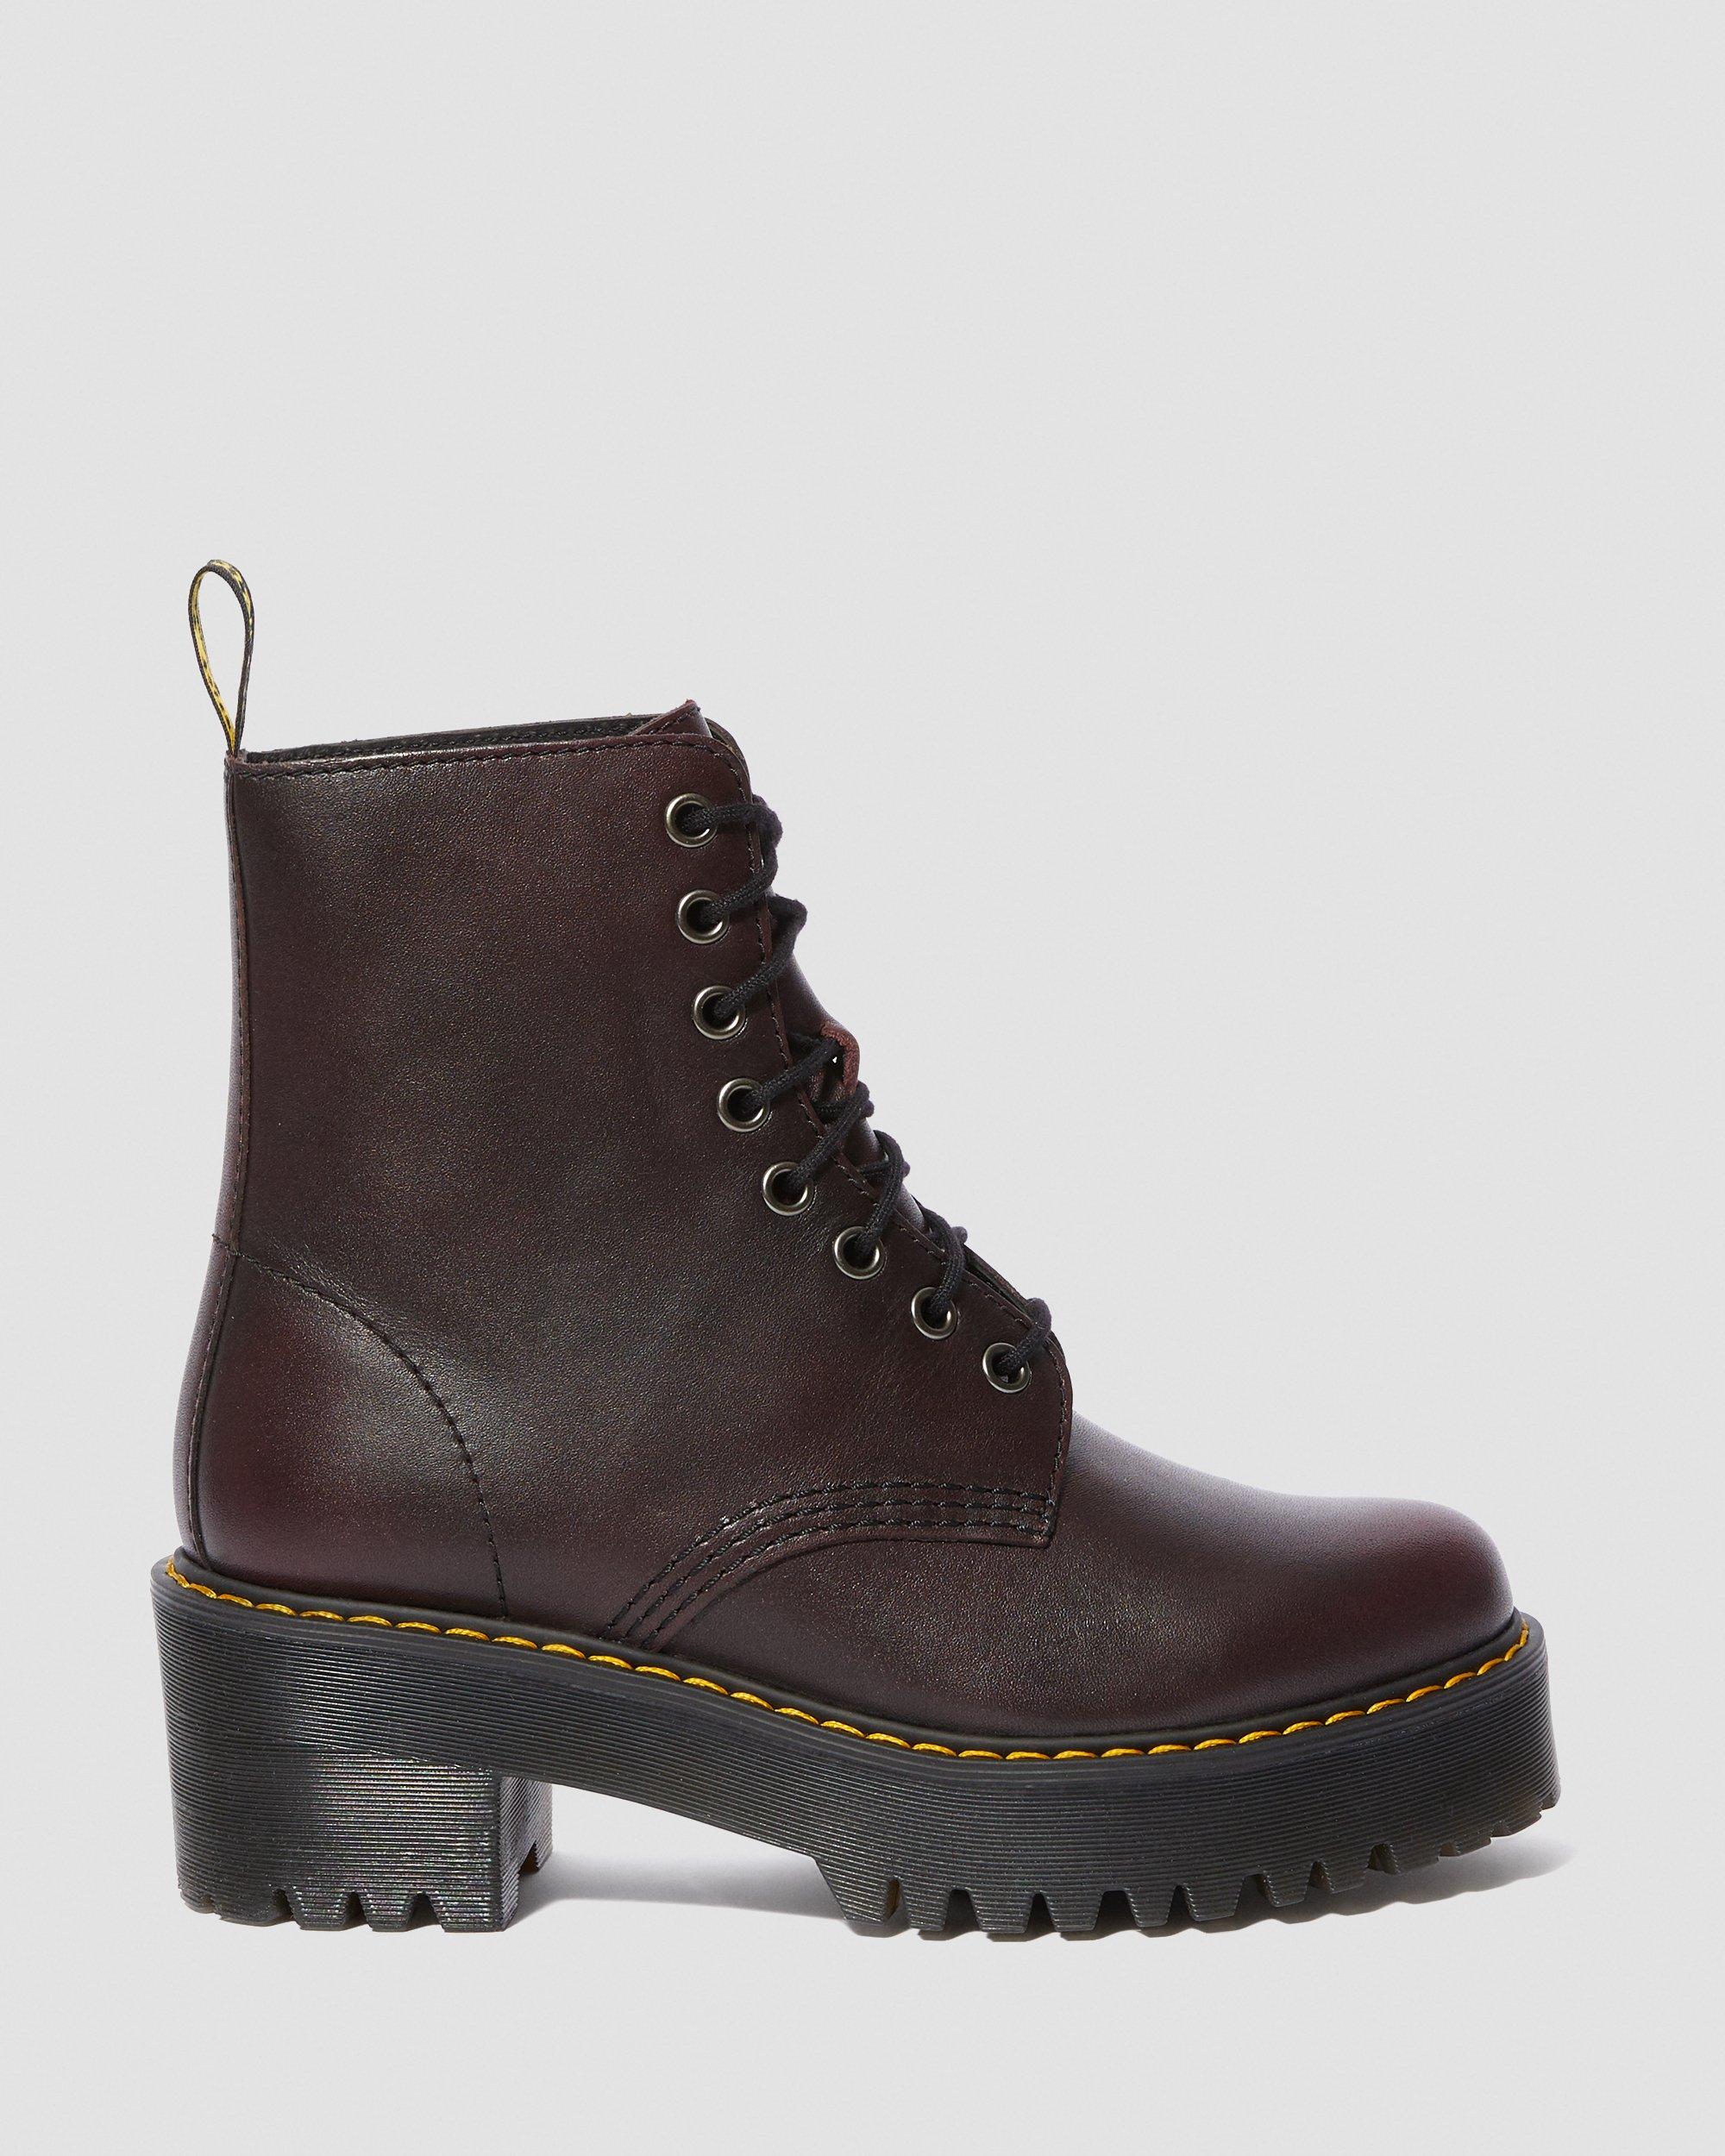 Gespierd De lucht Oost Shriver Hi Women's Vintage Leather Heeled Boots | Dr. Martens